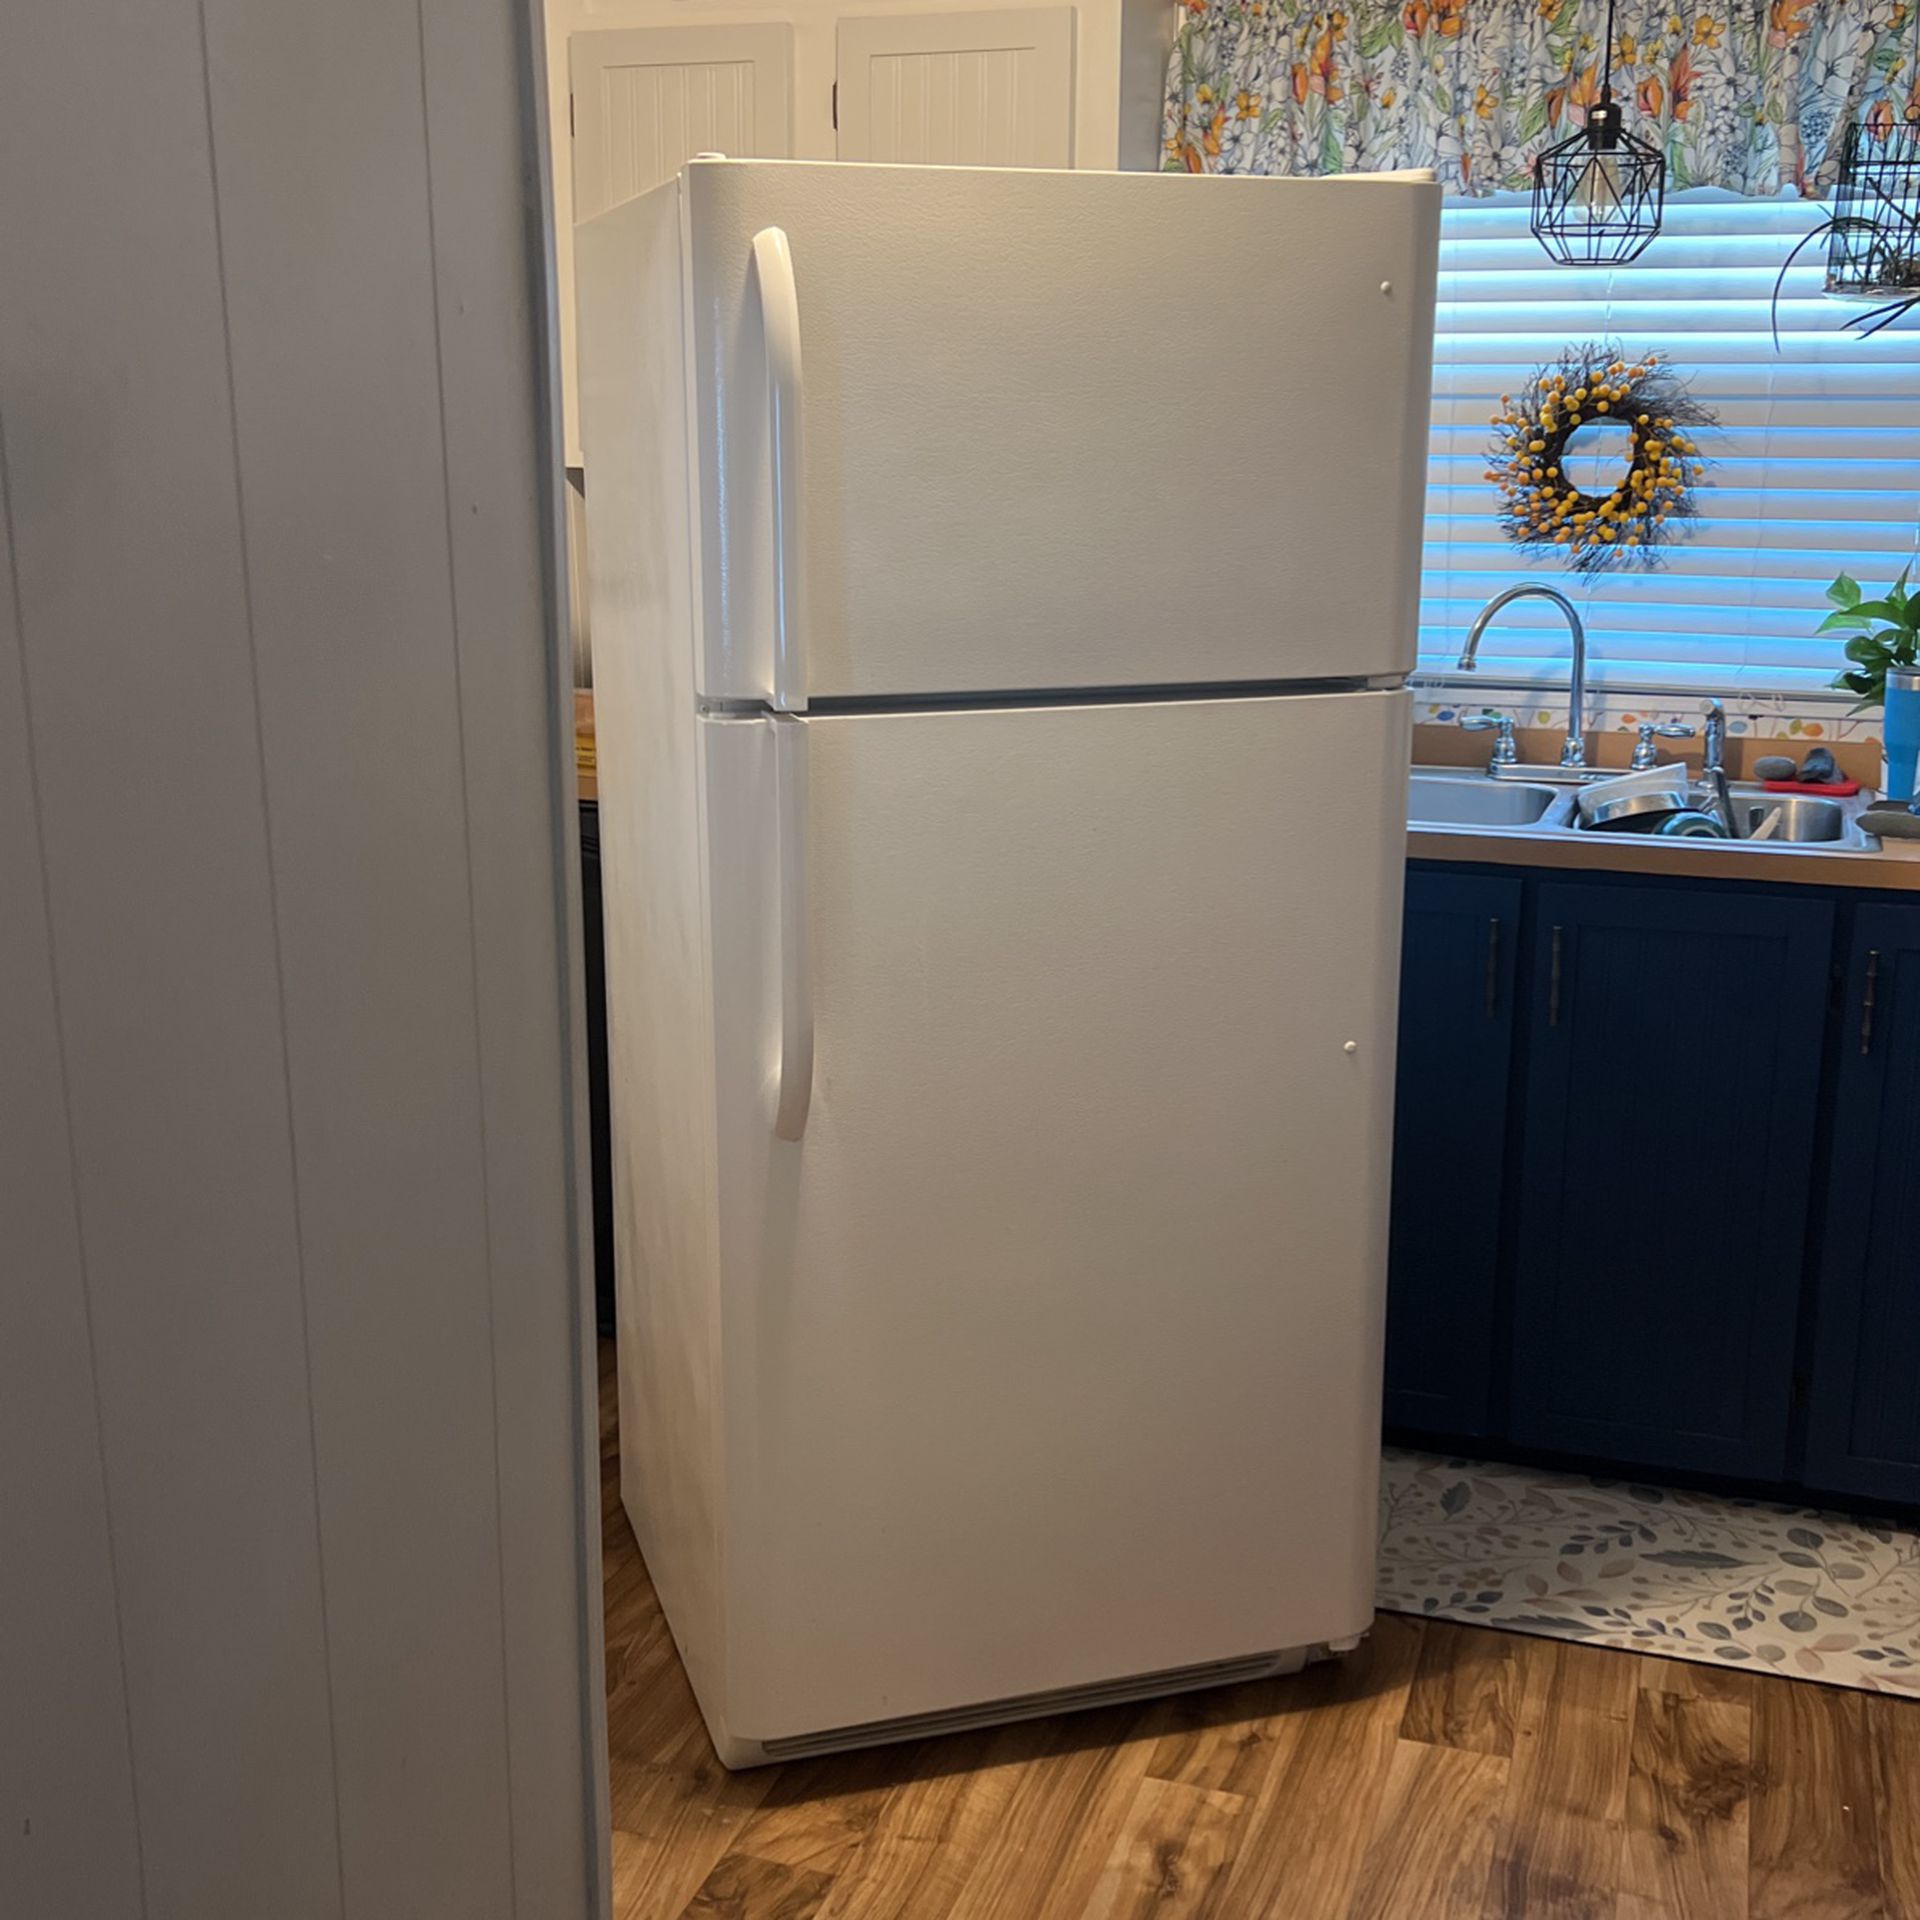 Refrigerator White 